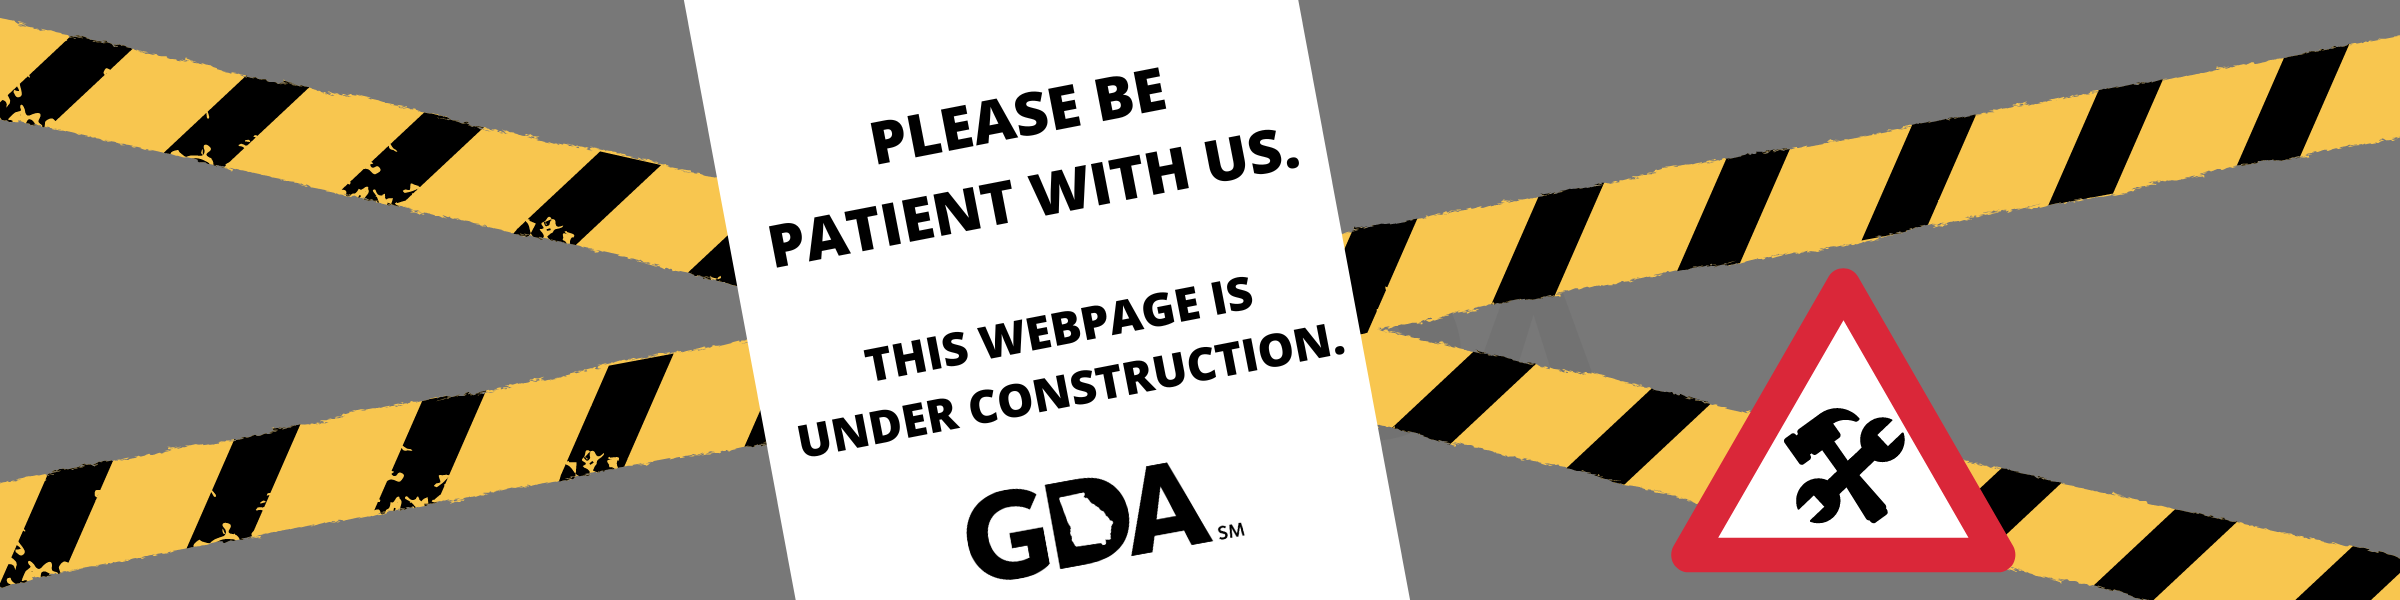 Webpage Under Construction - Header